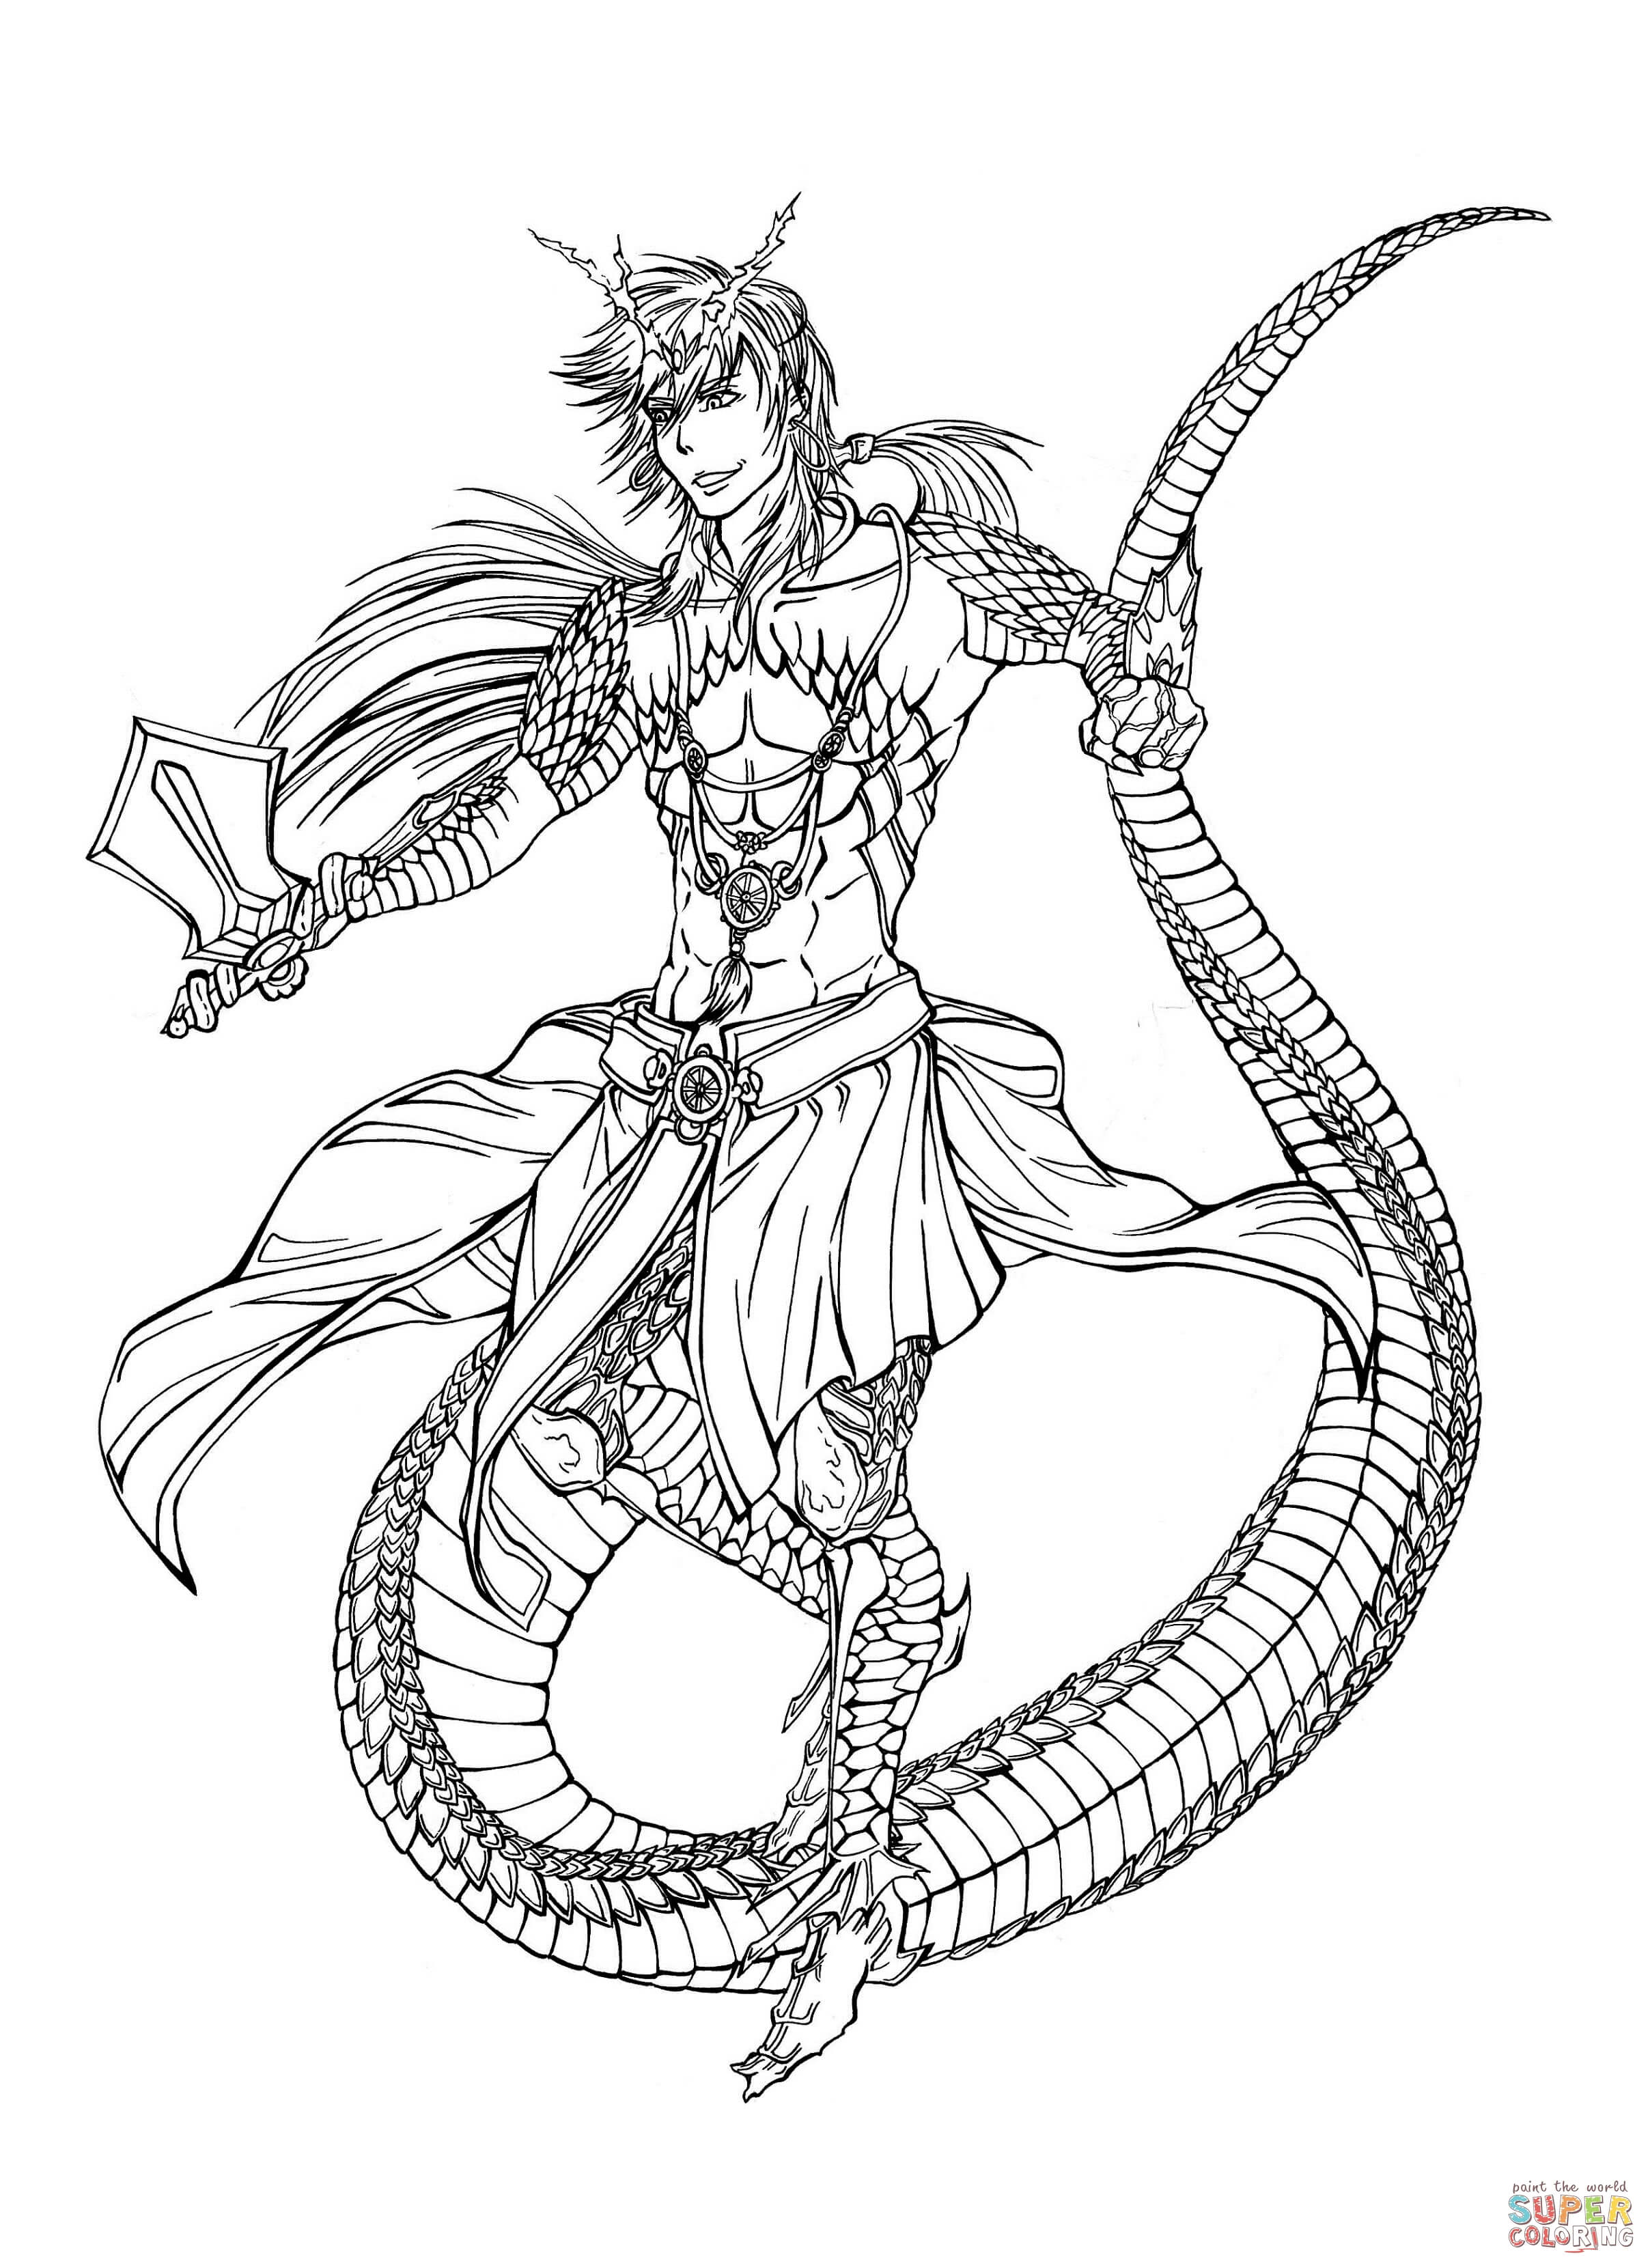 Sinbad Character from Manga/Anime series "Magi: The Labyrinth of ...